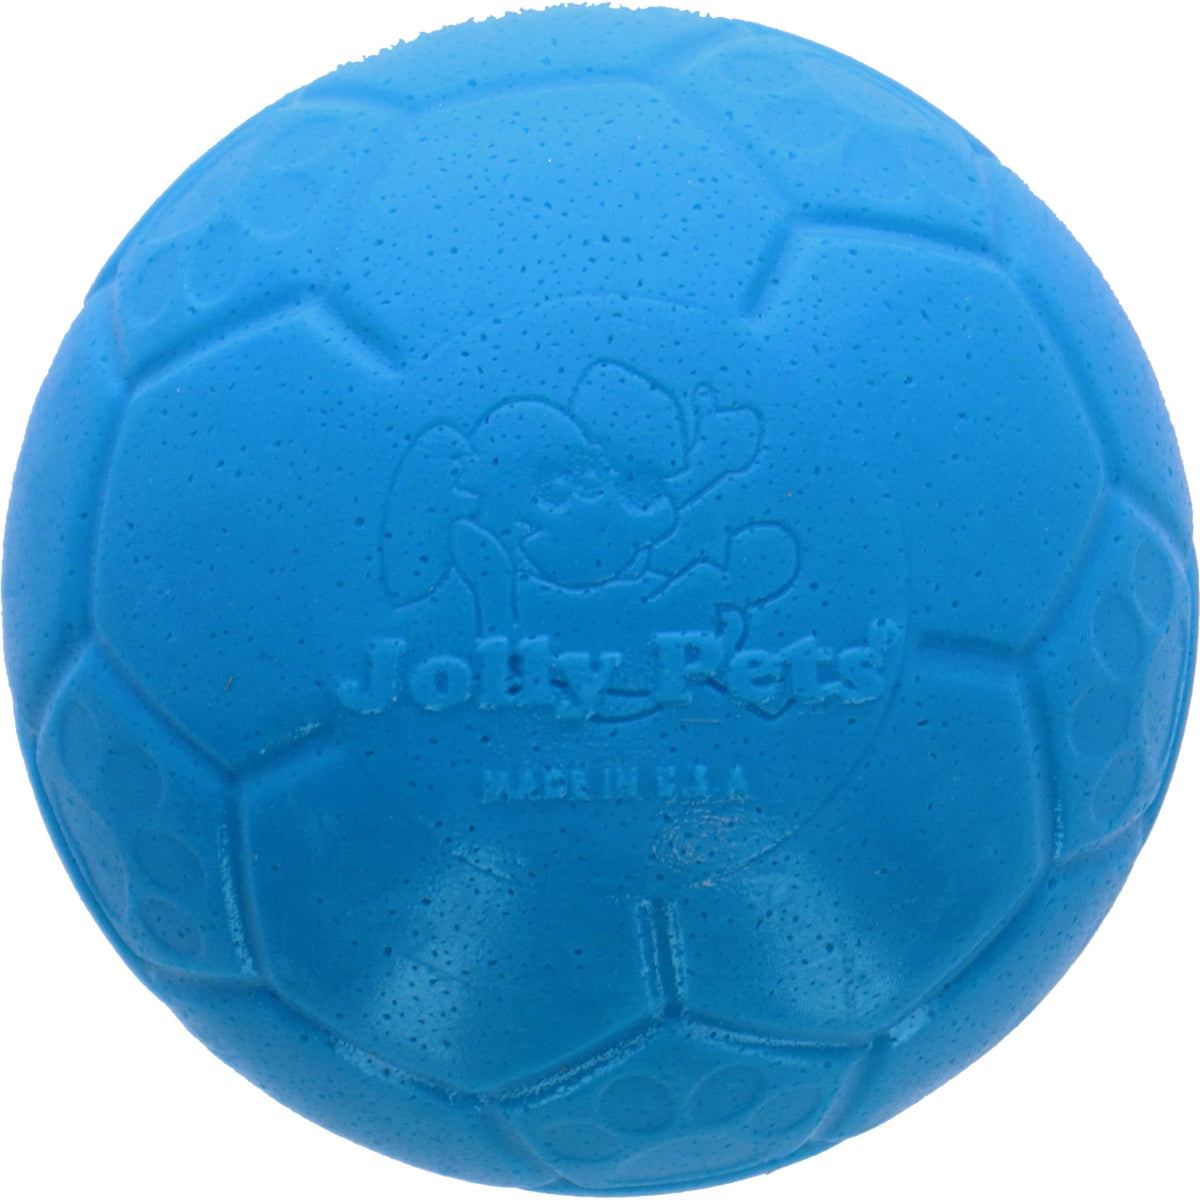 Jolly Ball Soccer Ball Meerblau